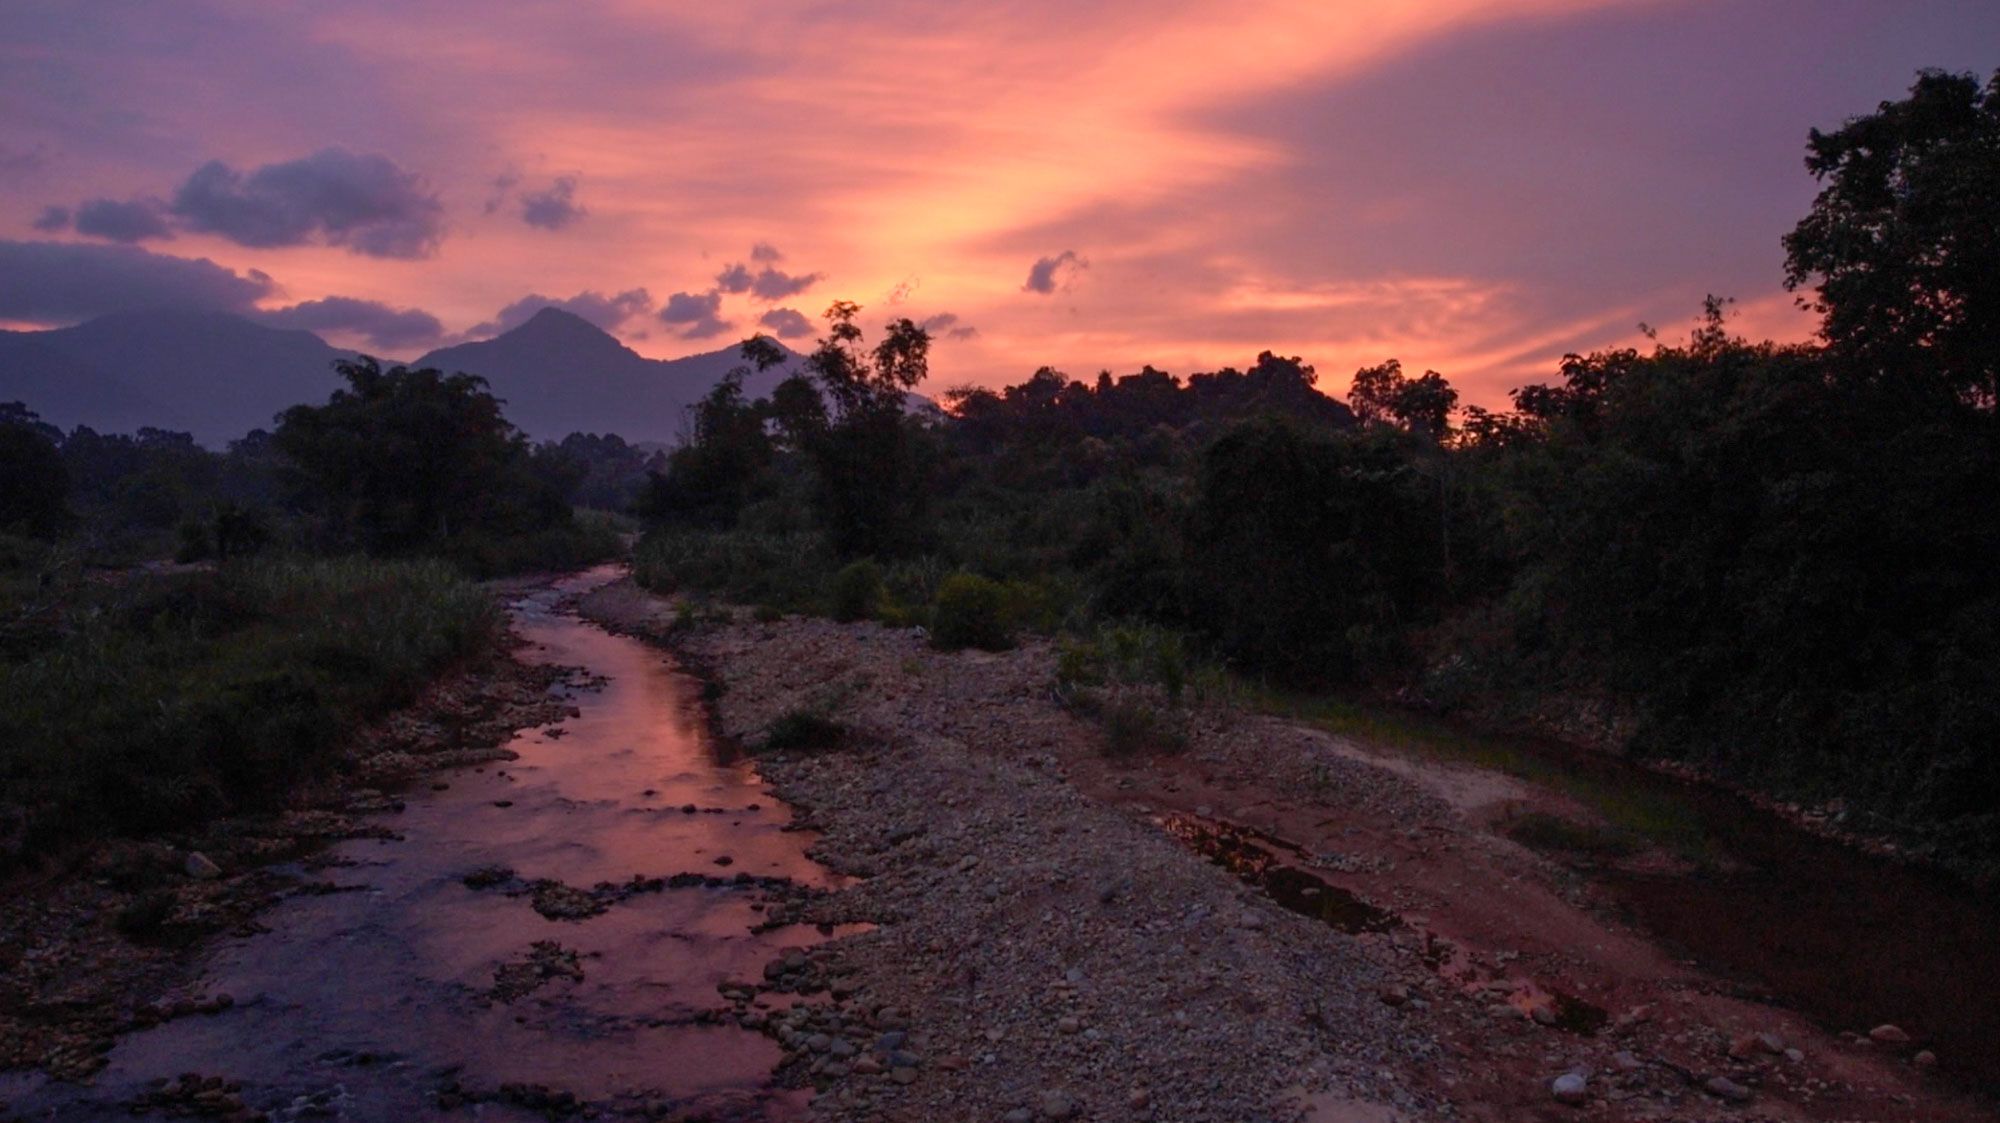 A small river flows near the village of Lumar as the sun sets behind the 4889’ peak of Gunung Bawang.